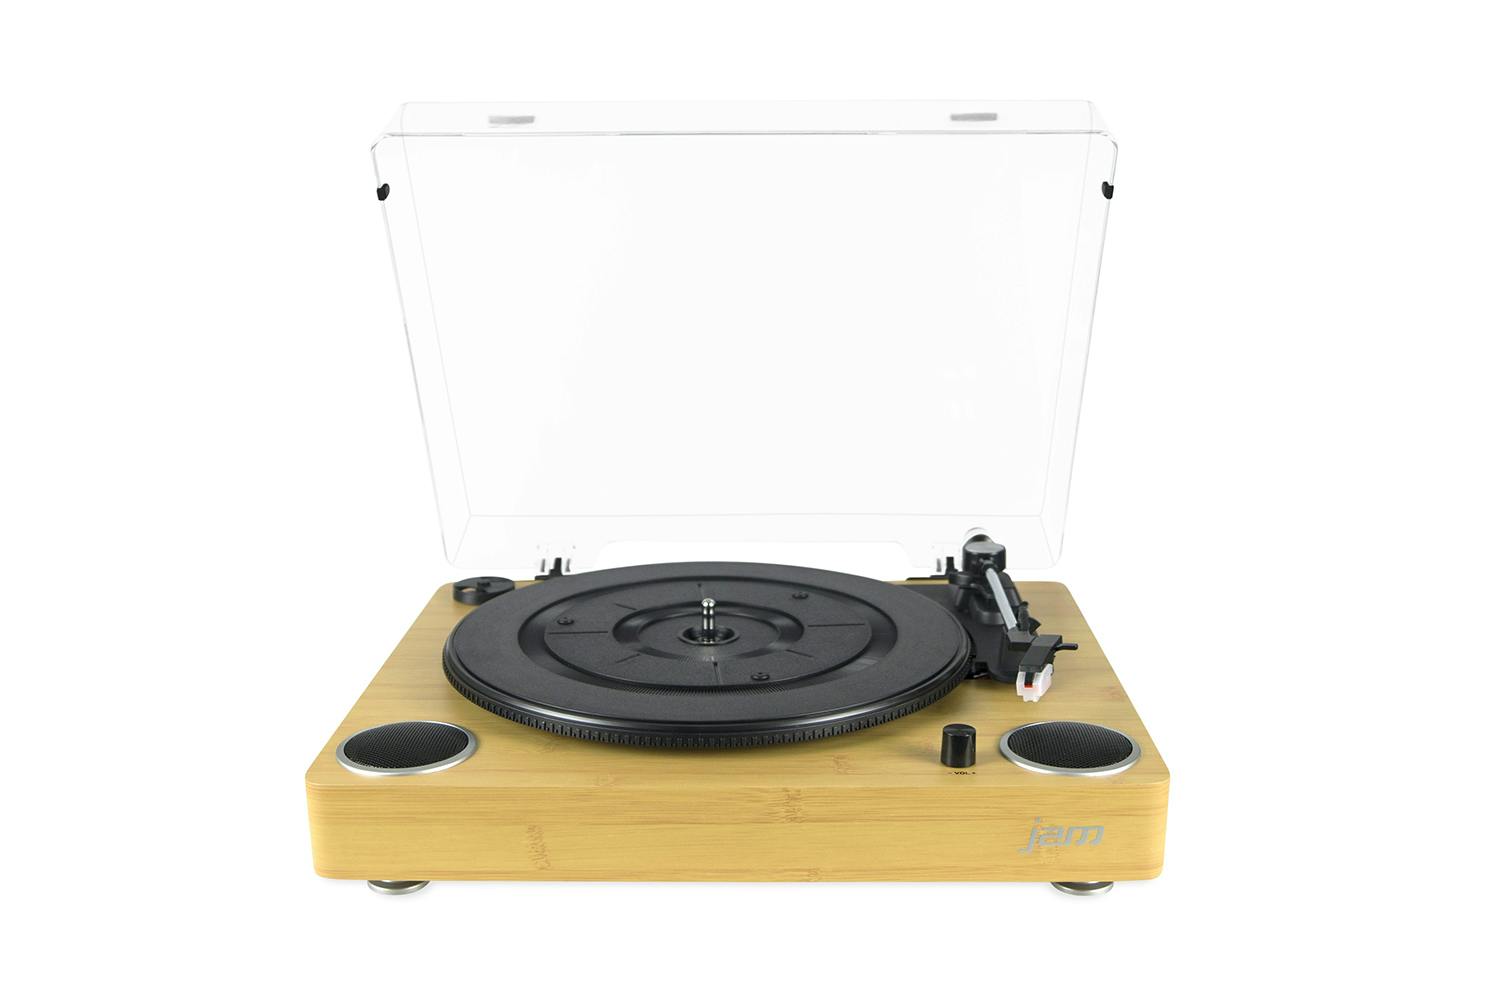 Jam Sound Turntable Built In Speakers Vinyl Record | HX-TTP200WD-GB